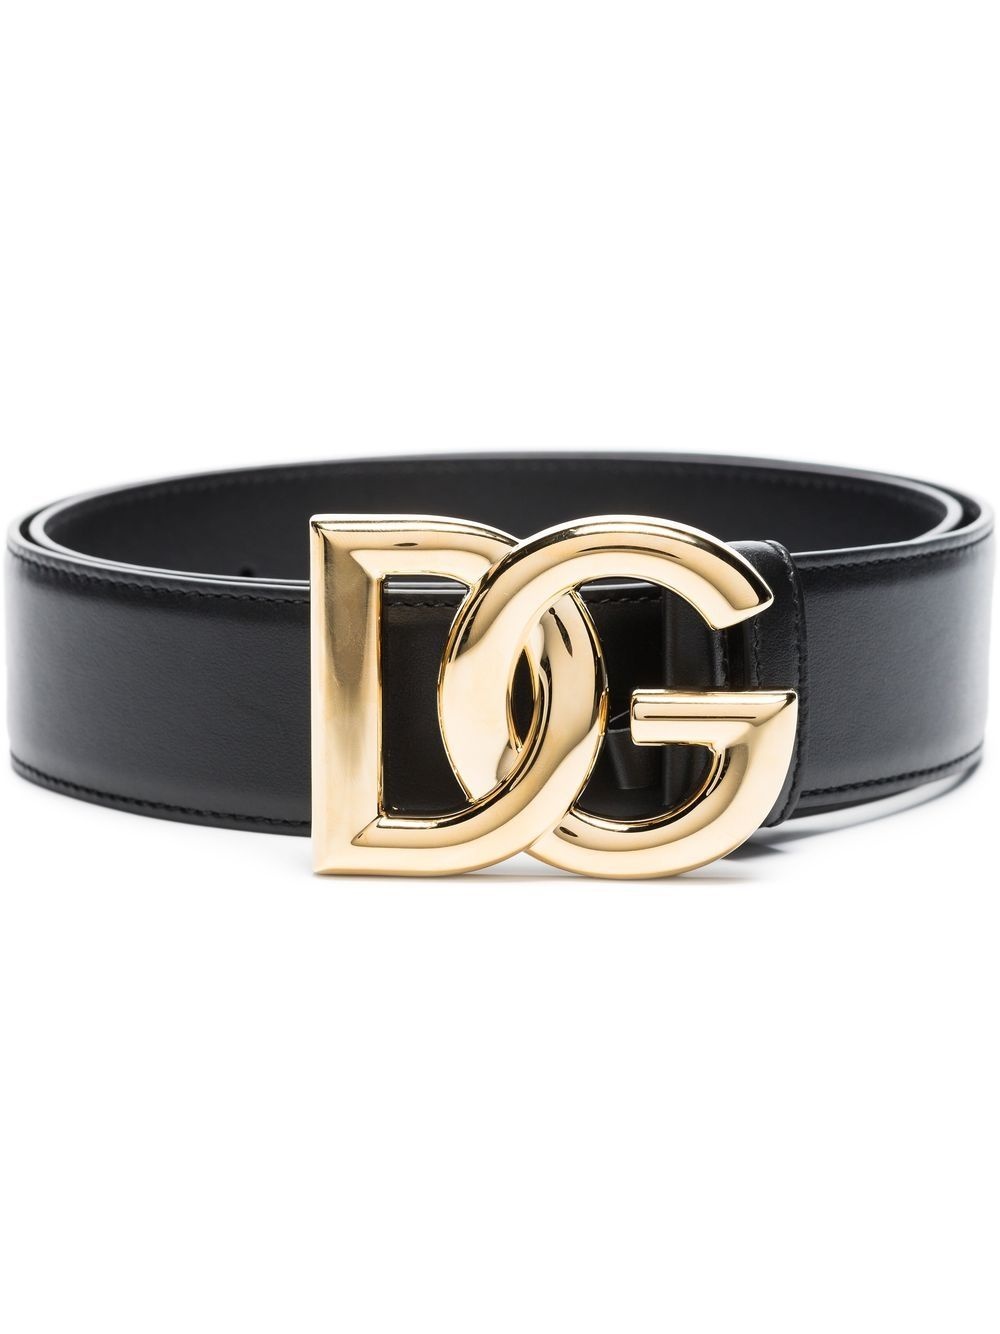 Dg logo leather belt - 1